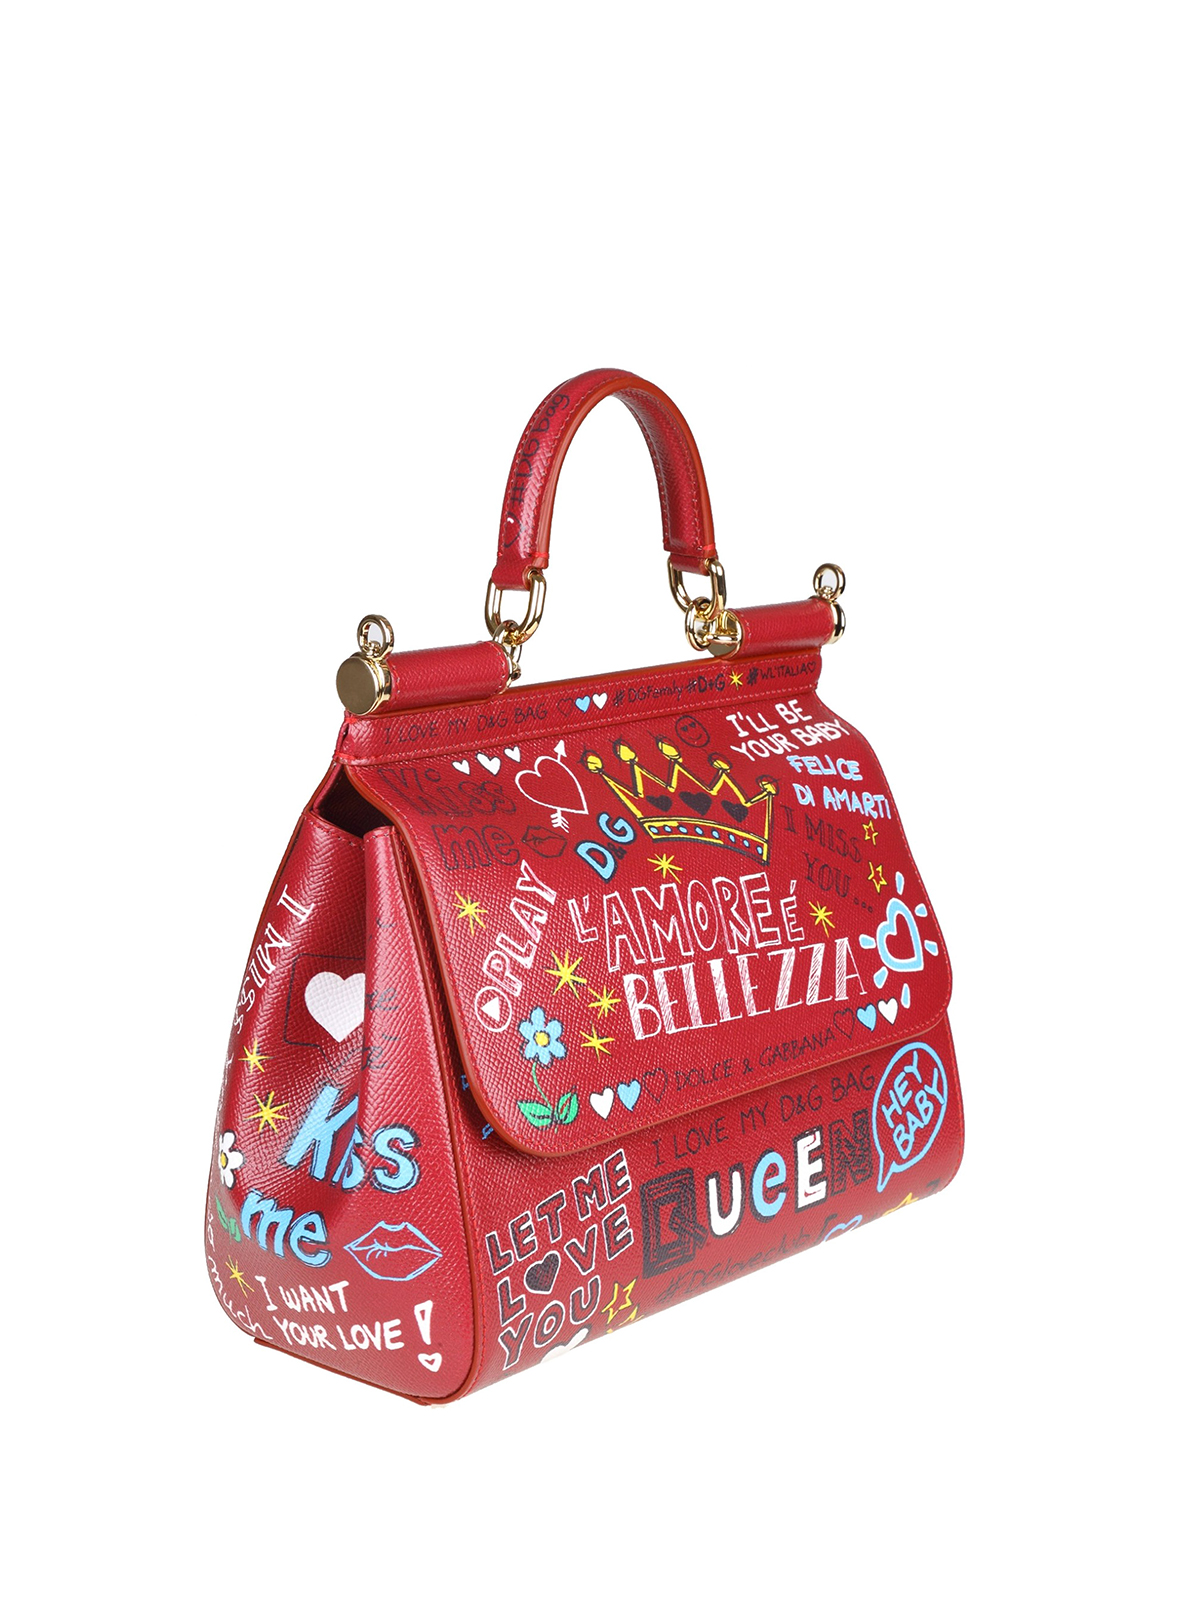 Dolce & Gabbana You Make Me Love You Miss Sicily Small Handbag